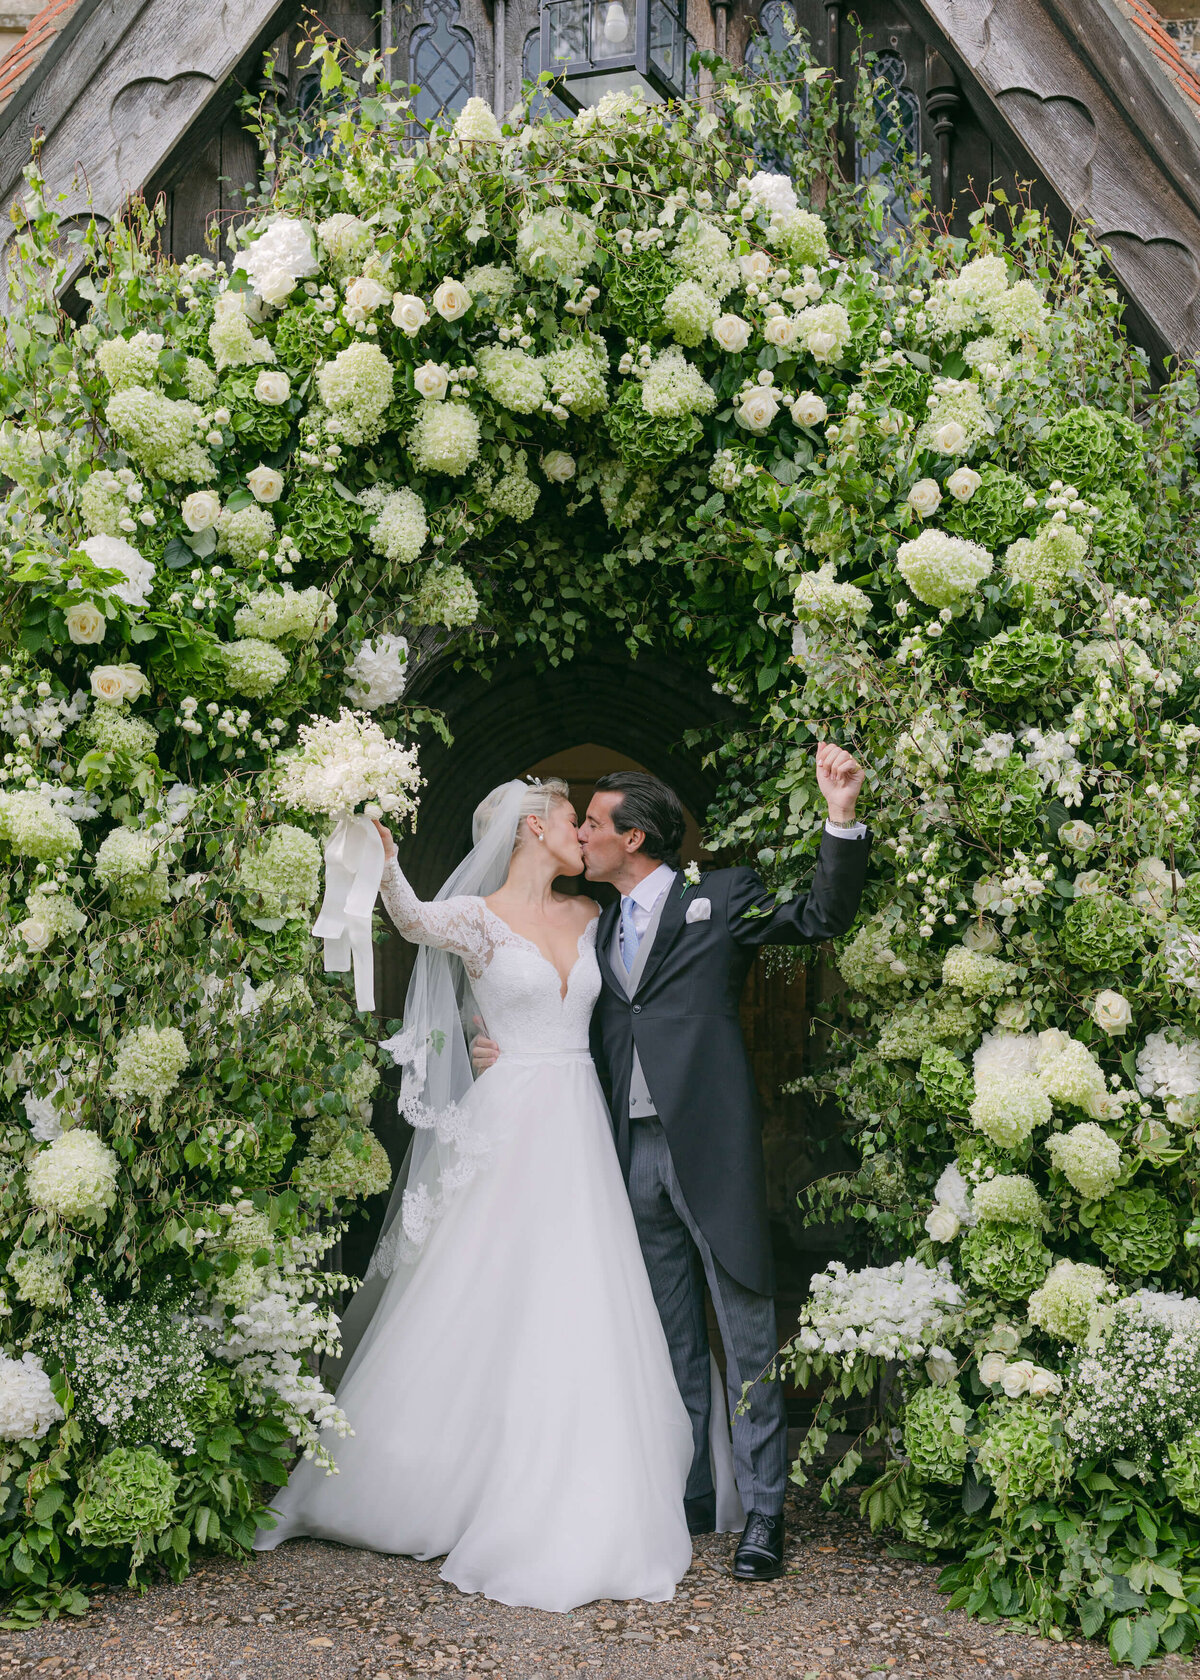 chloe-winstanley-weddings-hambleden-church-flower-arch-bride-groom-kiss